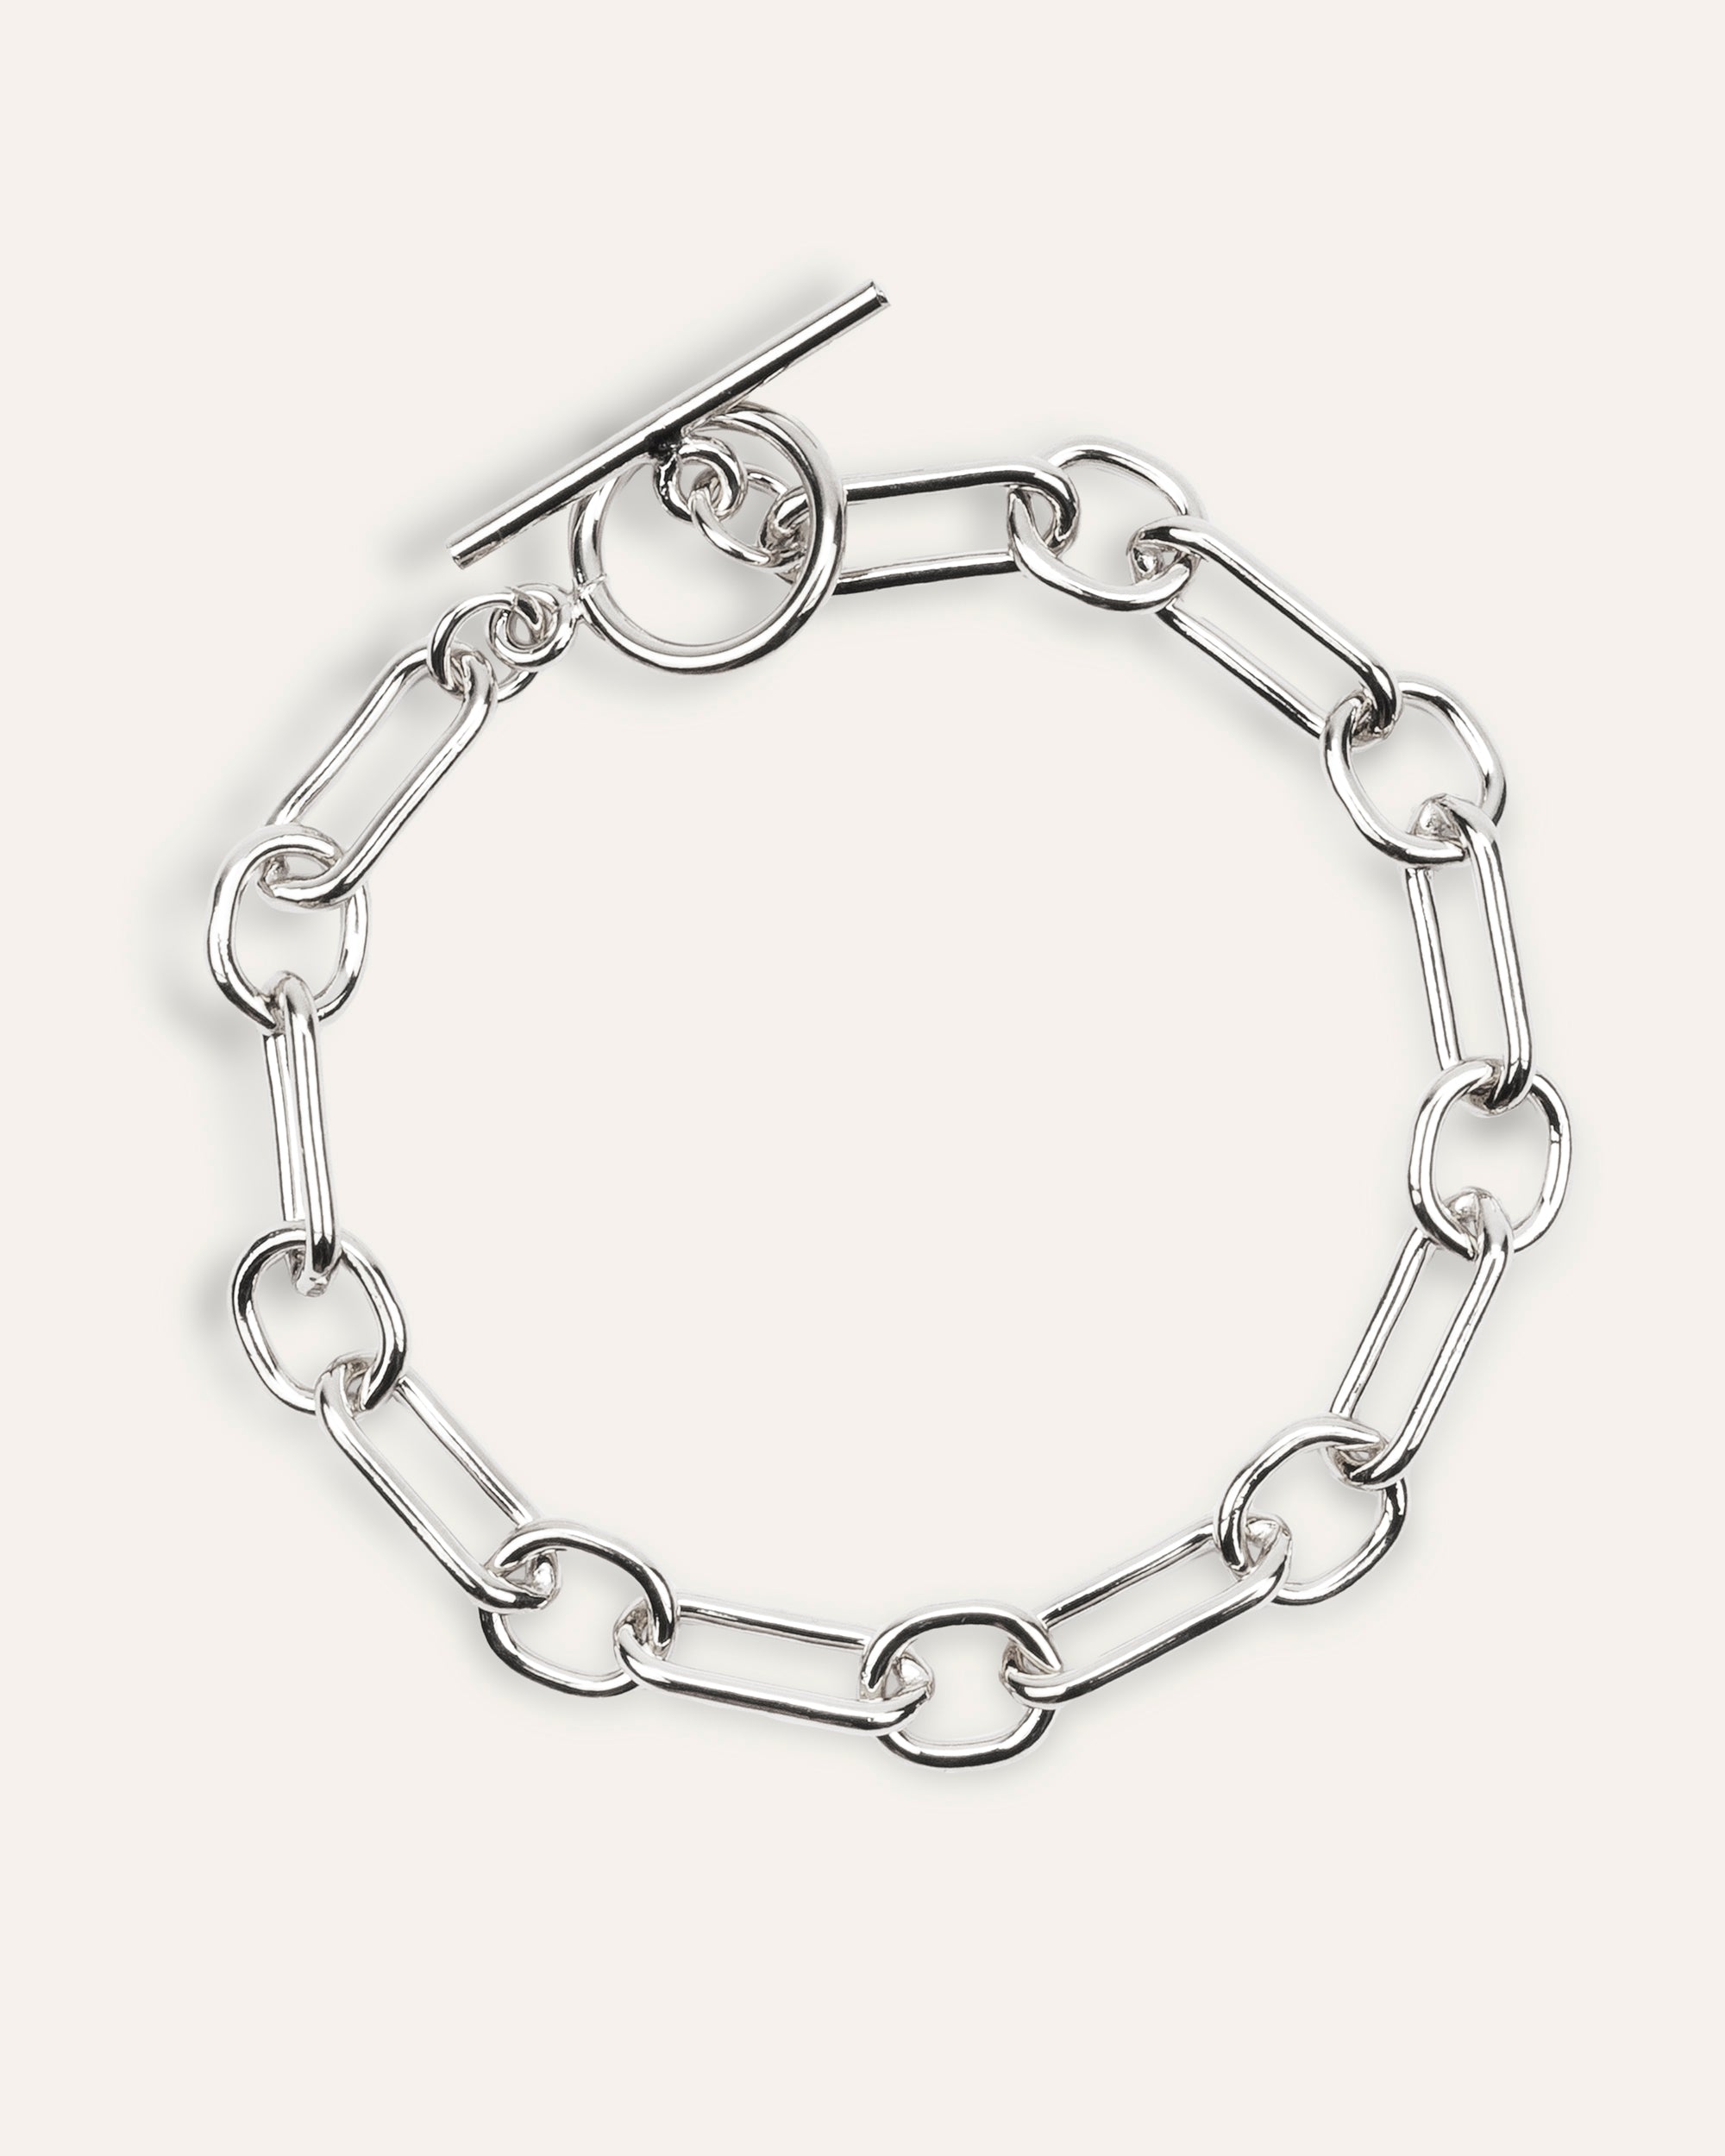 Rosa silver bracelet